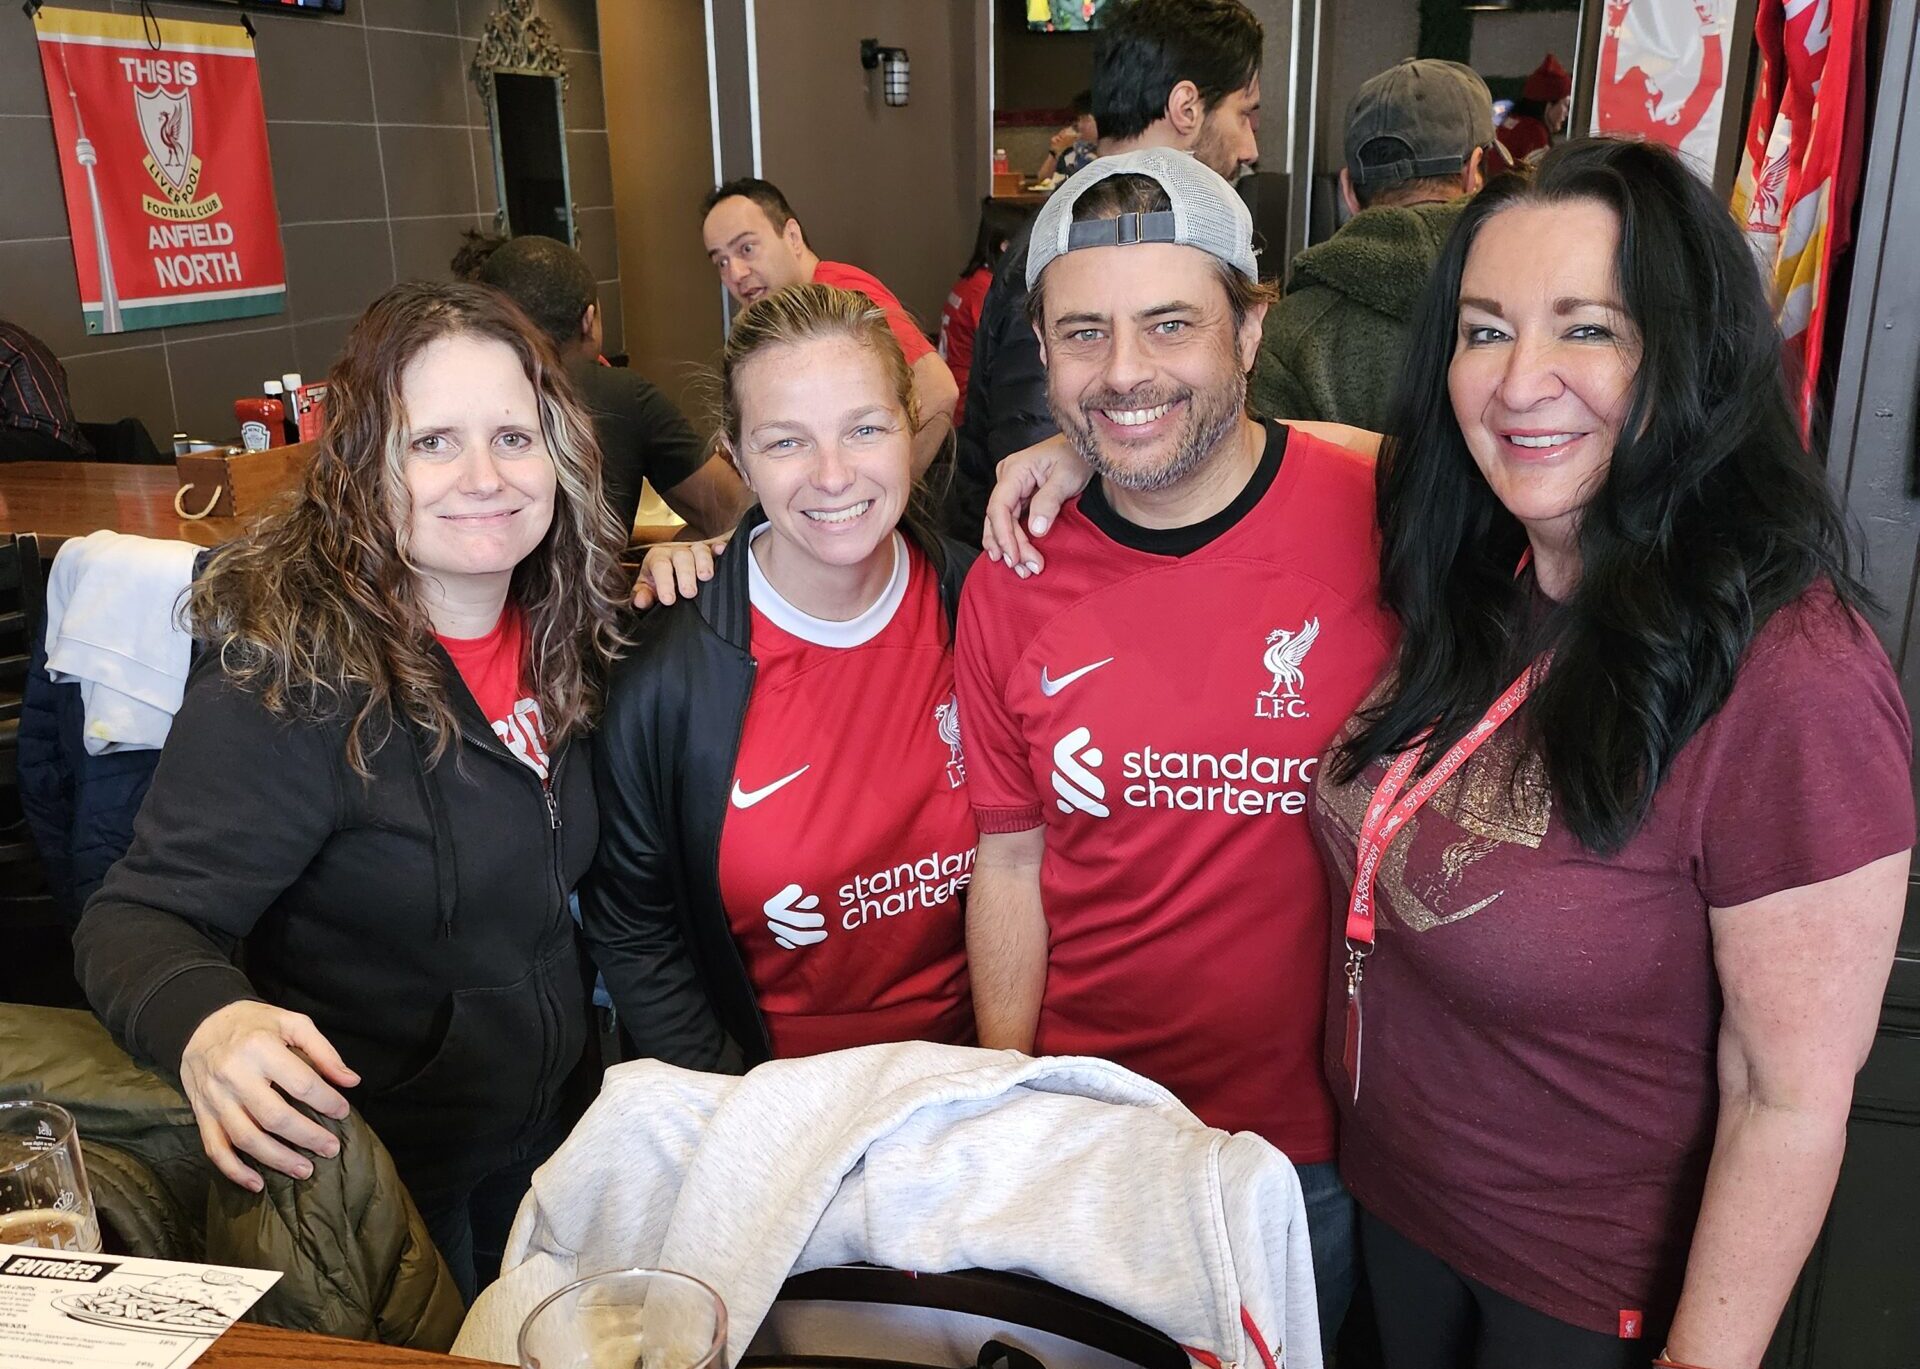 LFC Toronto Fans Meet at pub to watch match